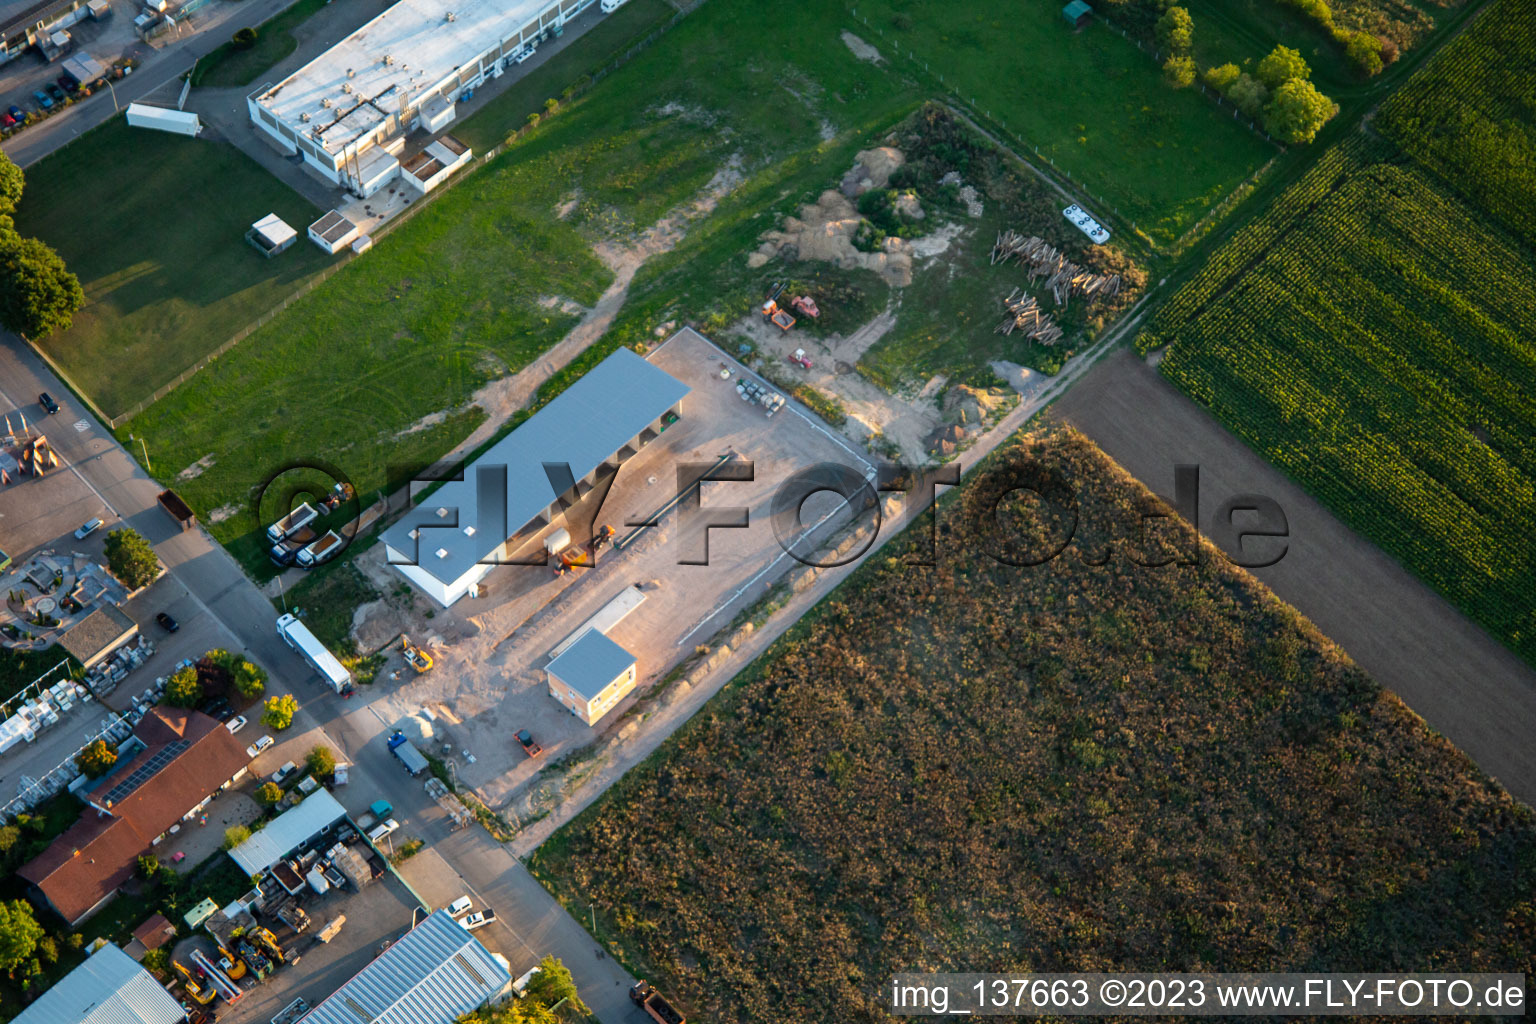 Aerial view of Industrial St in Billigheim-Ingenheim in the state Rhineland-Palatinate, Germany